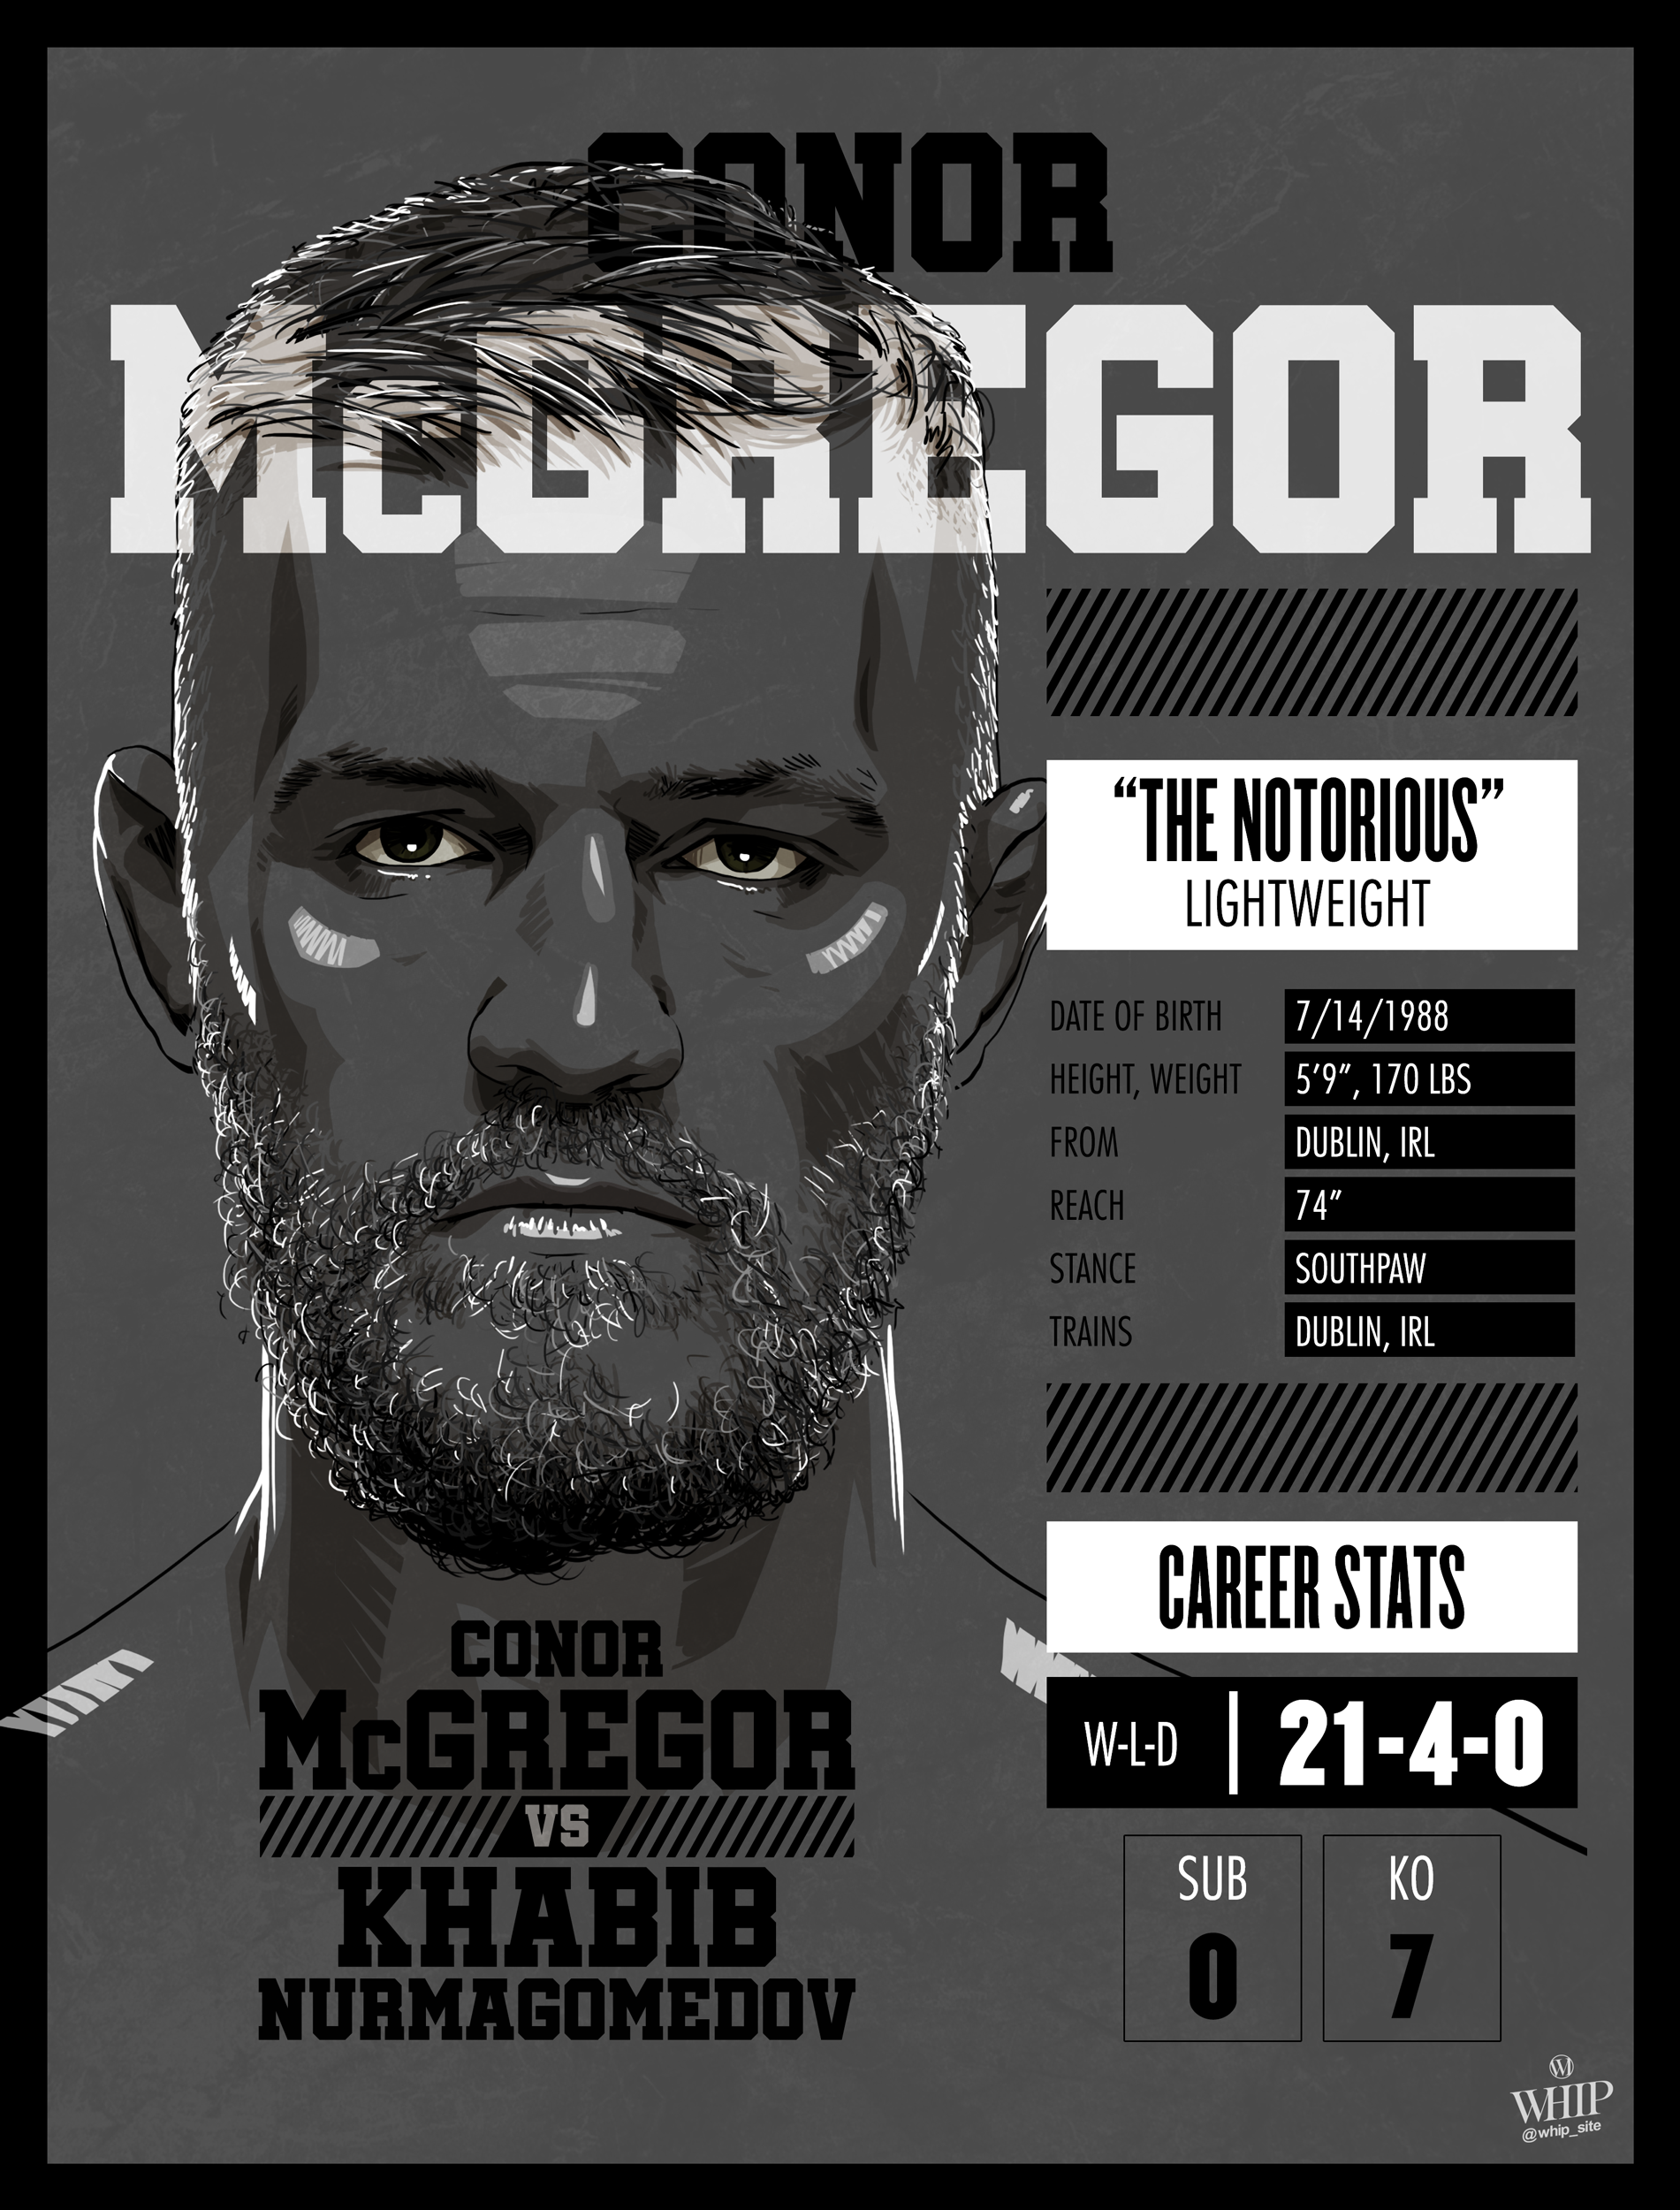 Khabib vs conor mcgregor fight date night